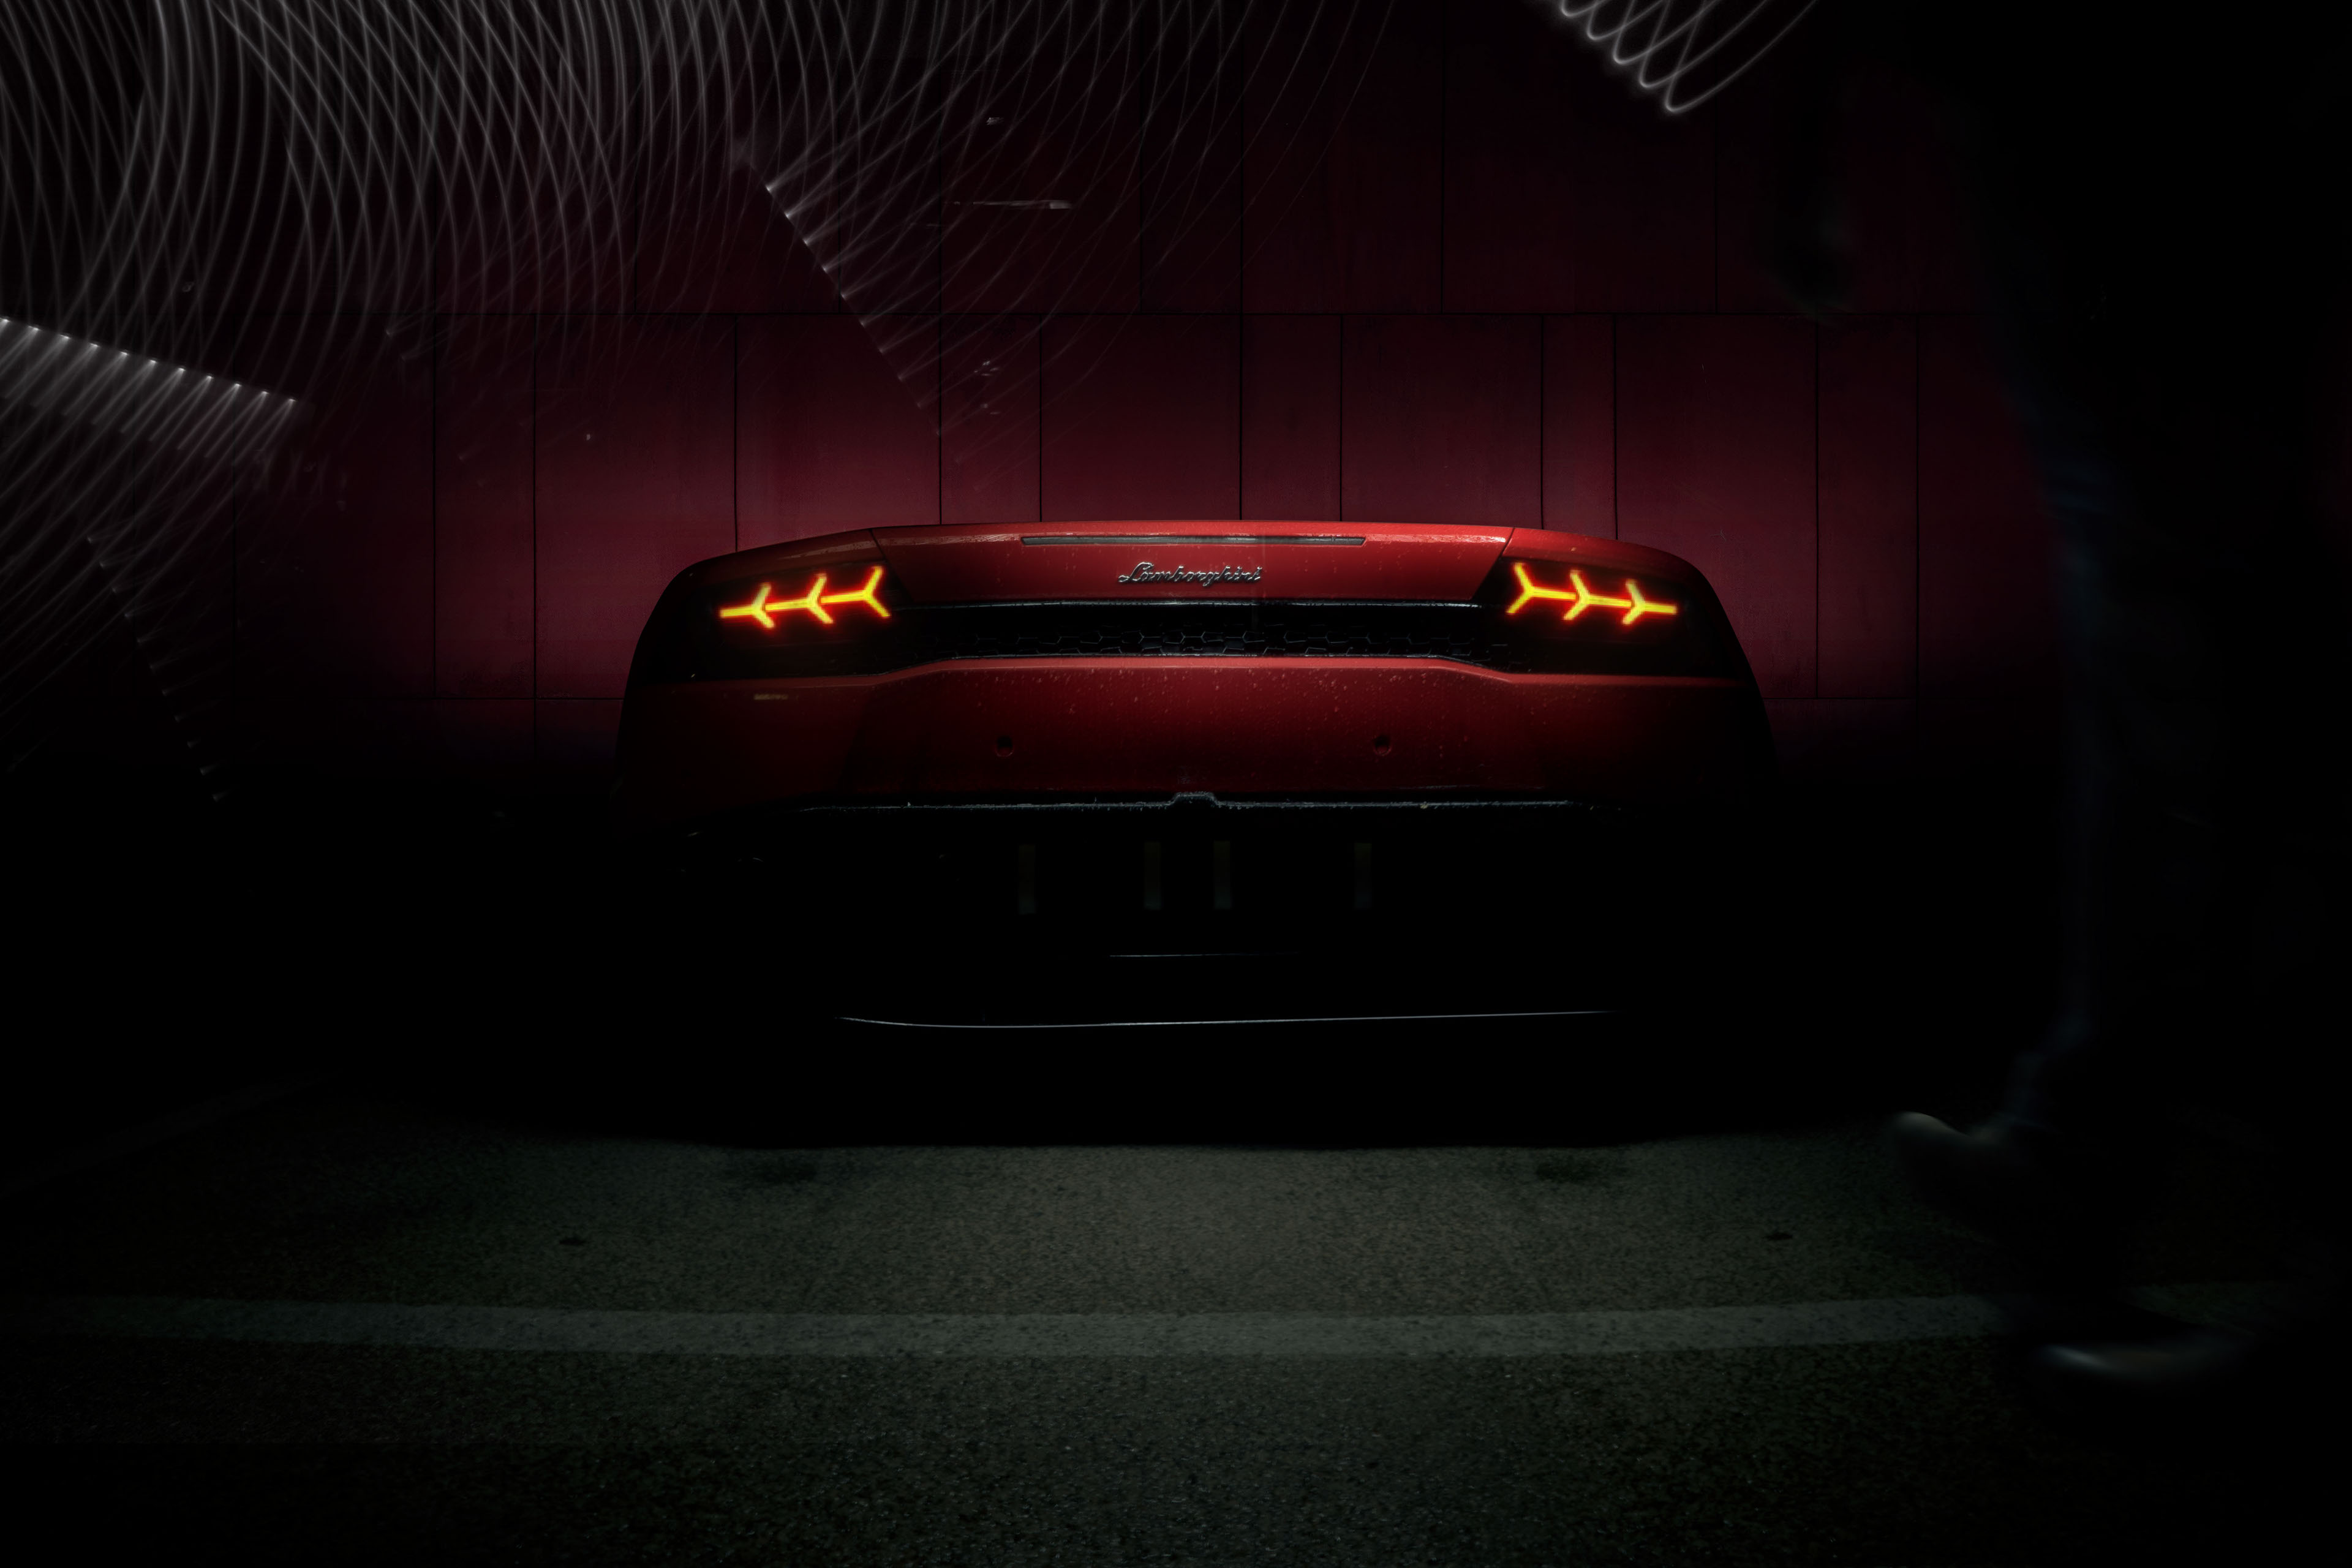 The Best Car Lights Hd Wallpaper - Sports Car Wallpaper 4k